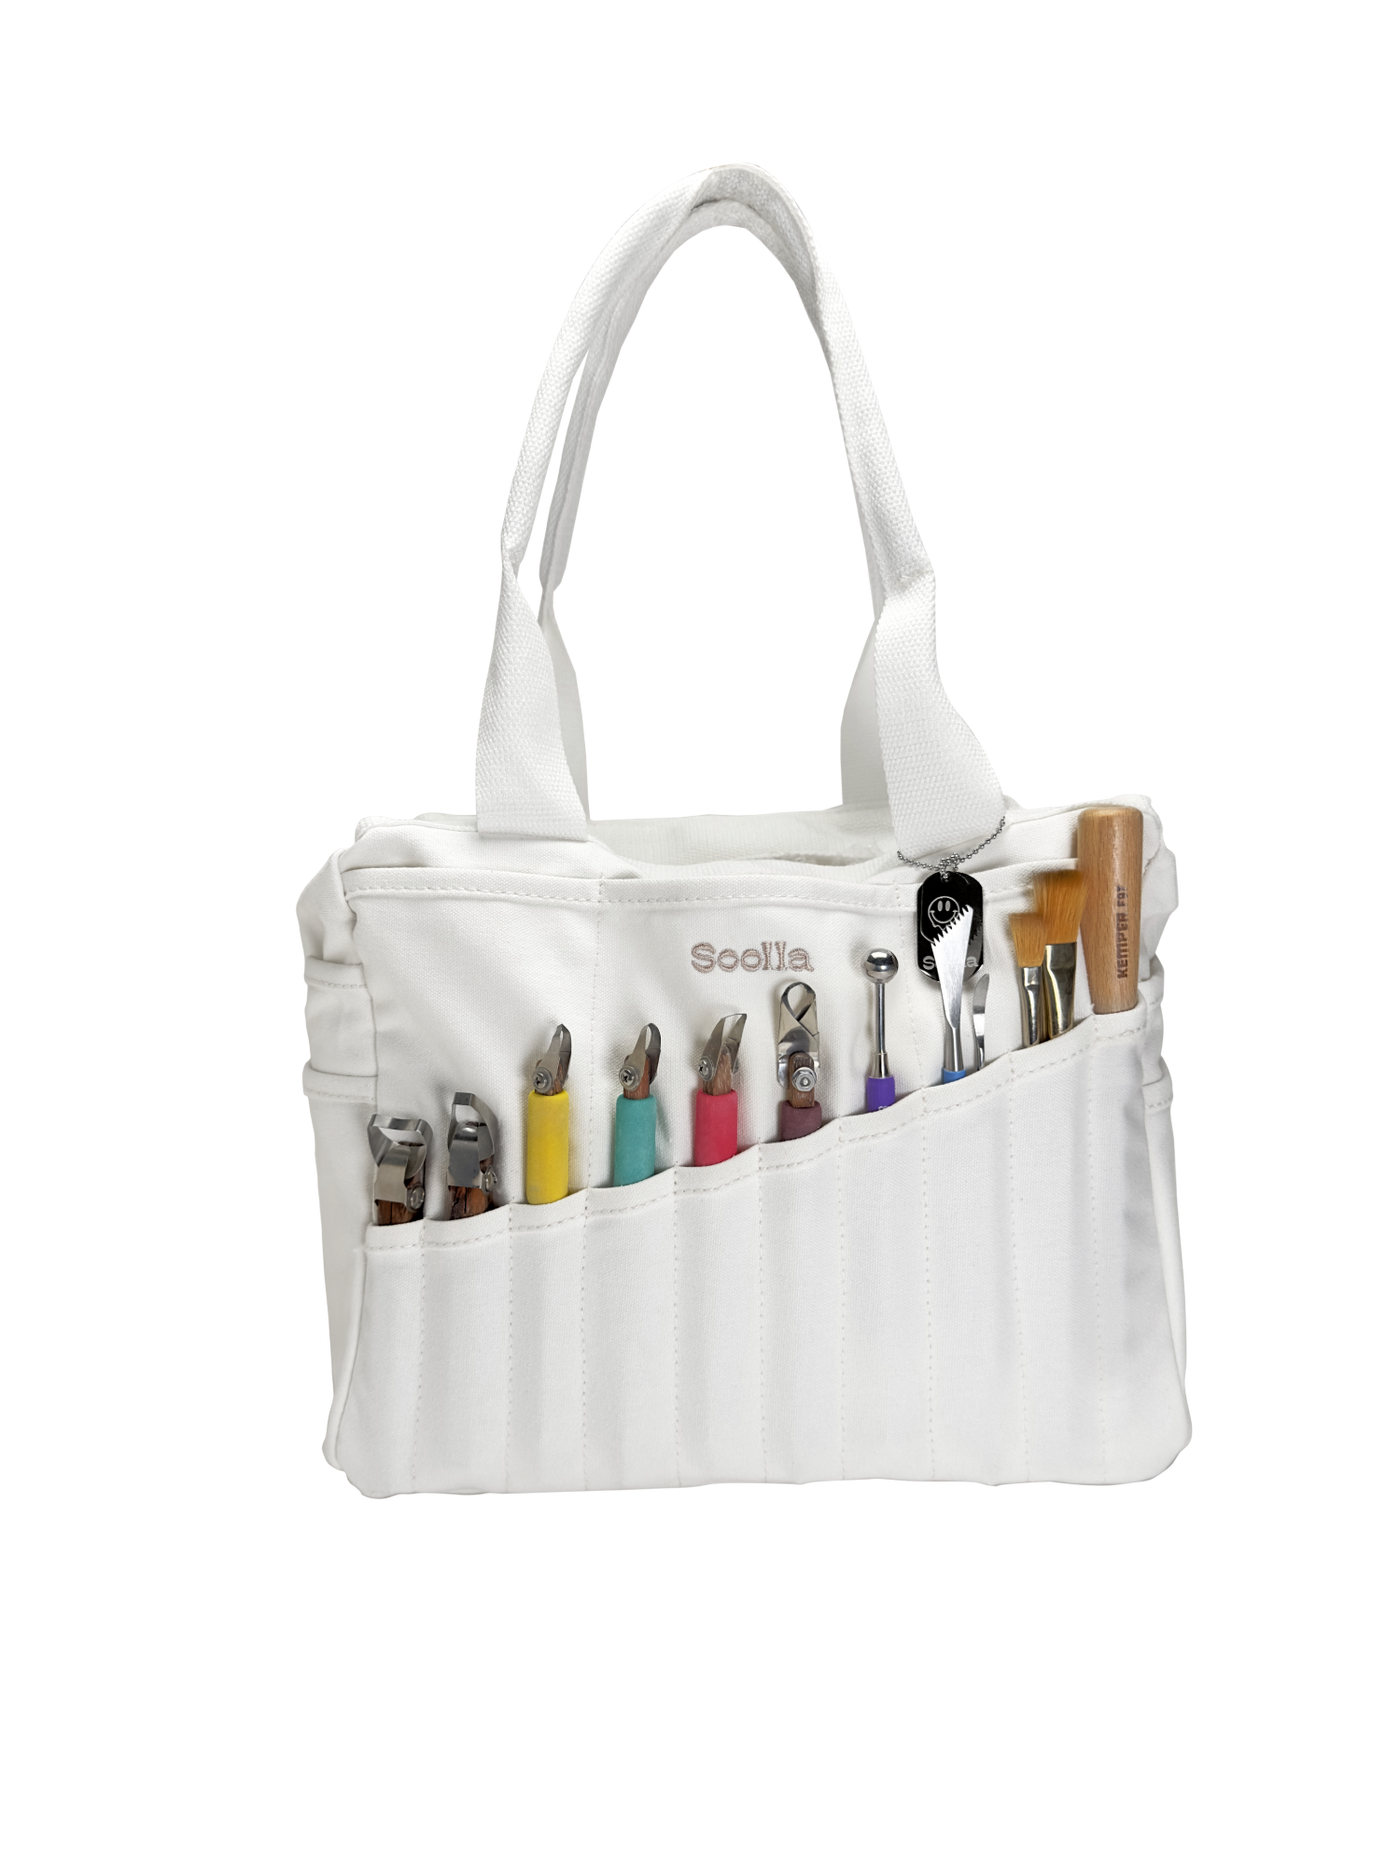 Soolla Studio Bag Washable Art Supply & Pottery Tool Bag Organizer,  Knitting & Crochet Project Bag, 30+ Pockets, 15+ Colors, Durable Canvas  Tote Caddy